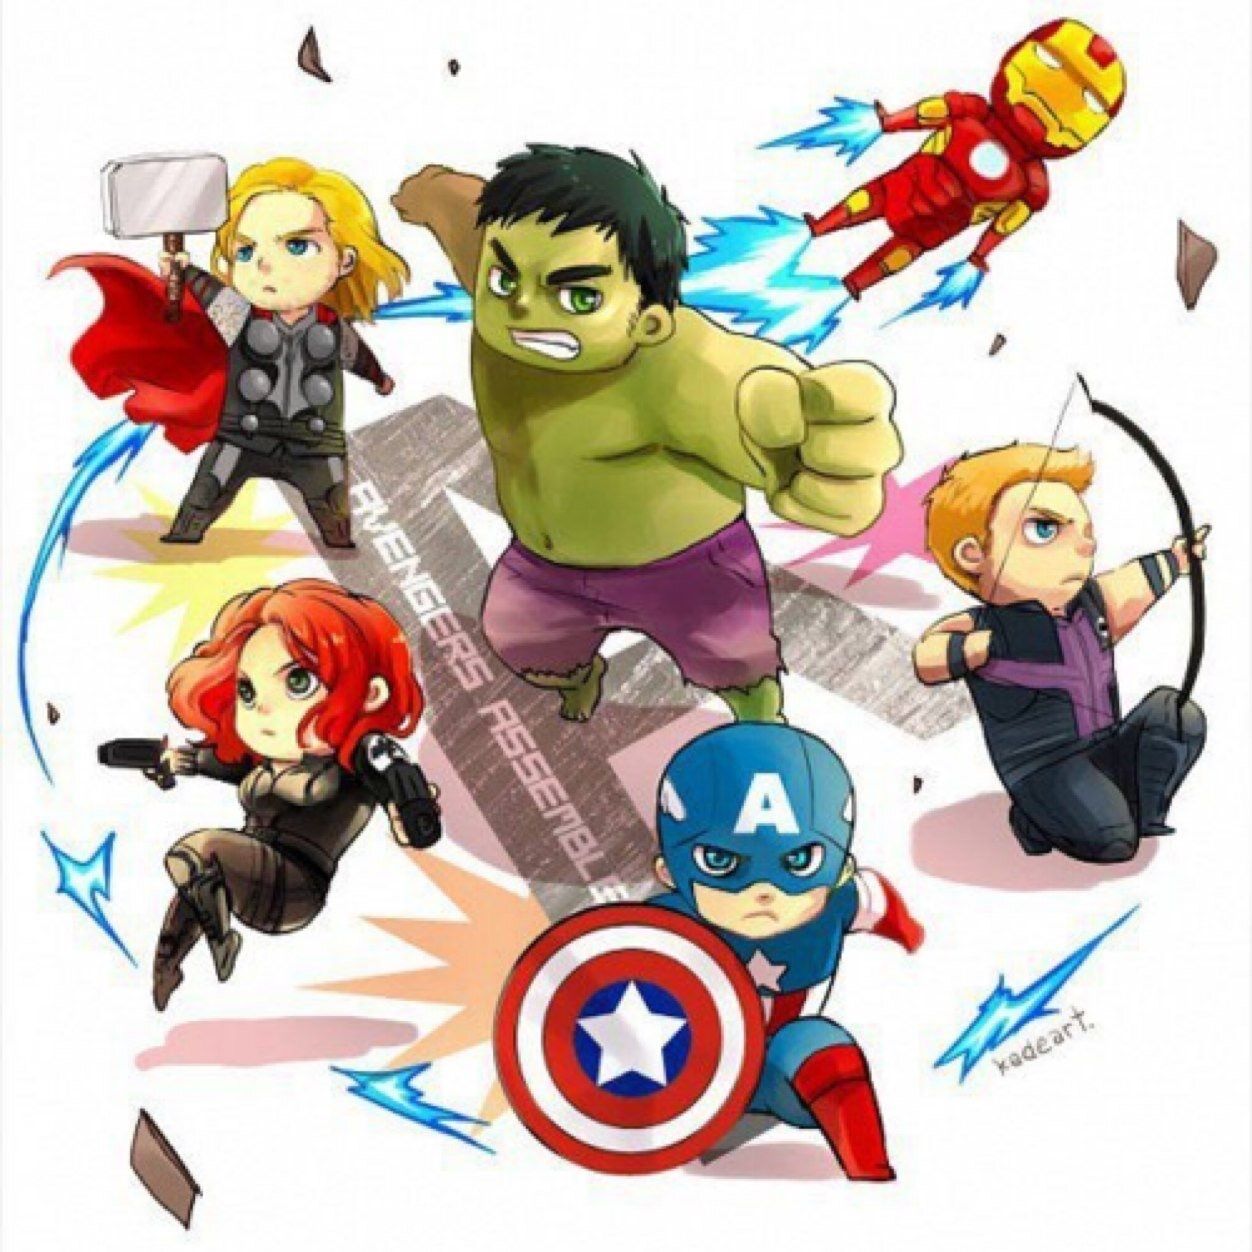 Avengers clipart cartoon.